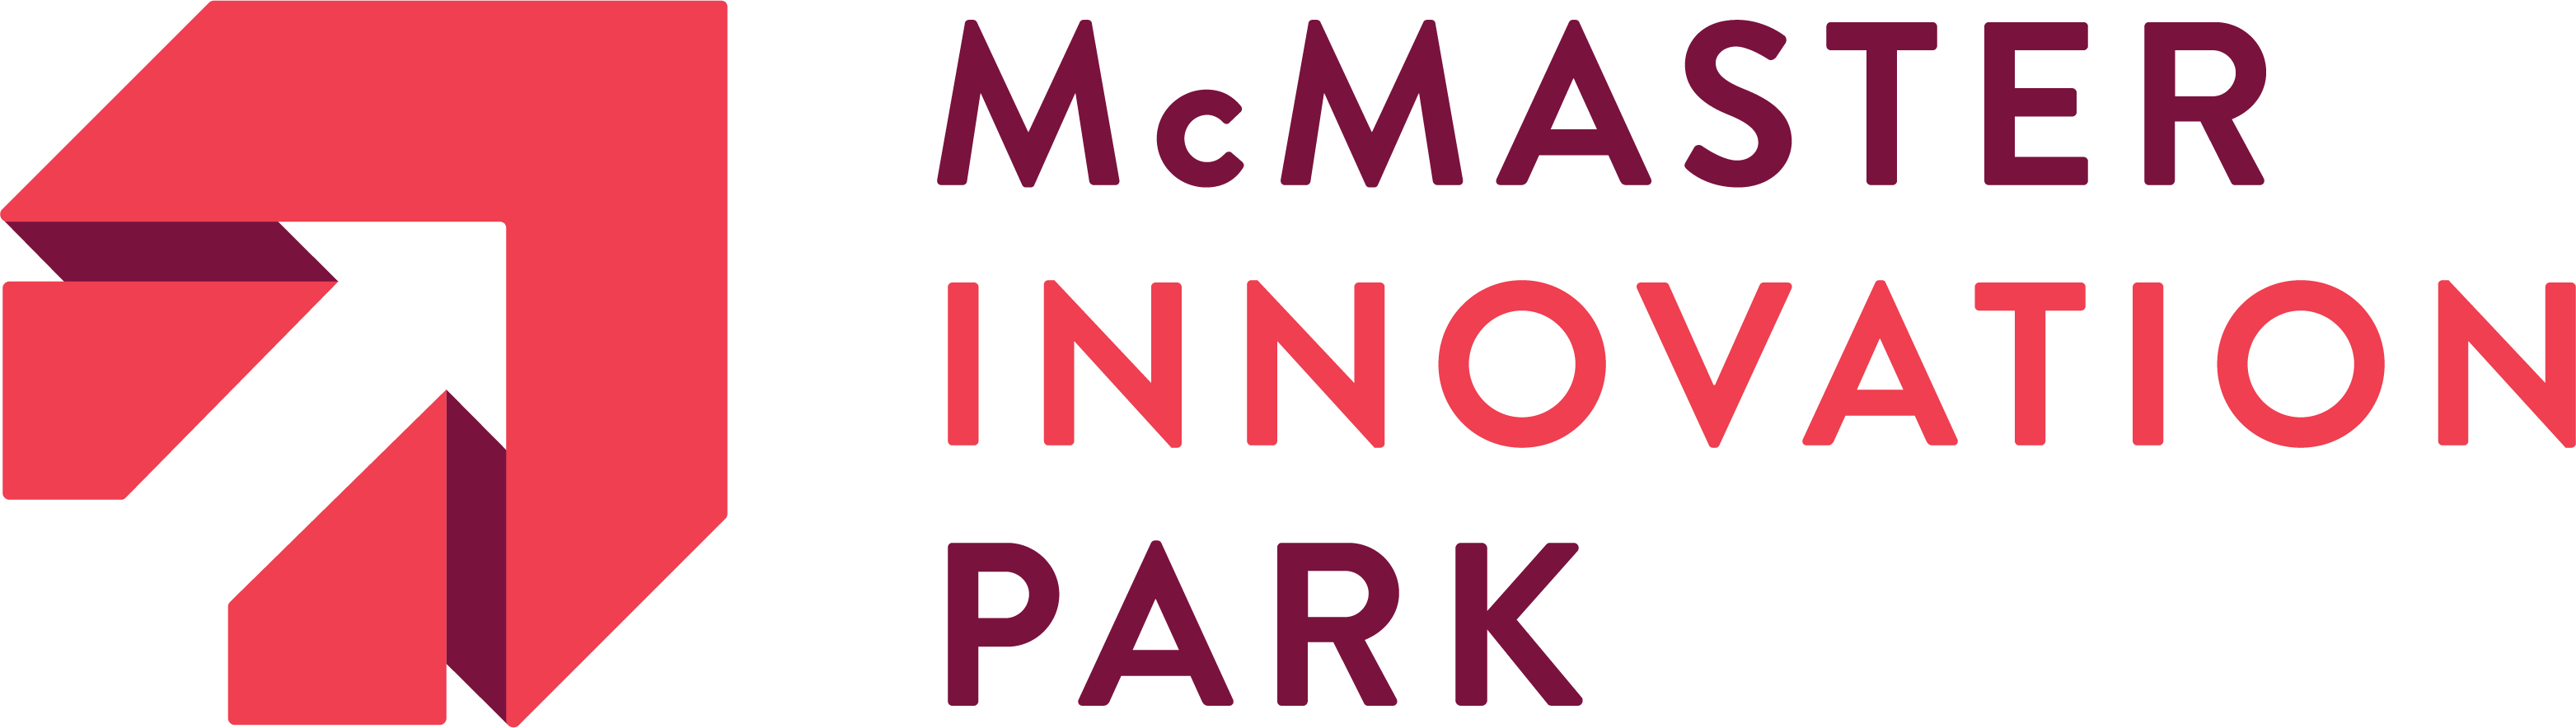 logo for McMaster Innovation Park